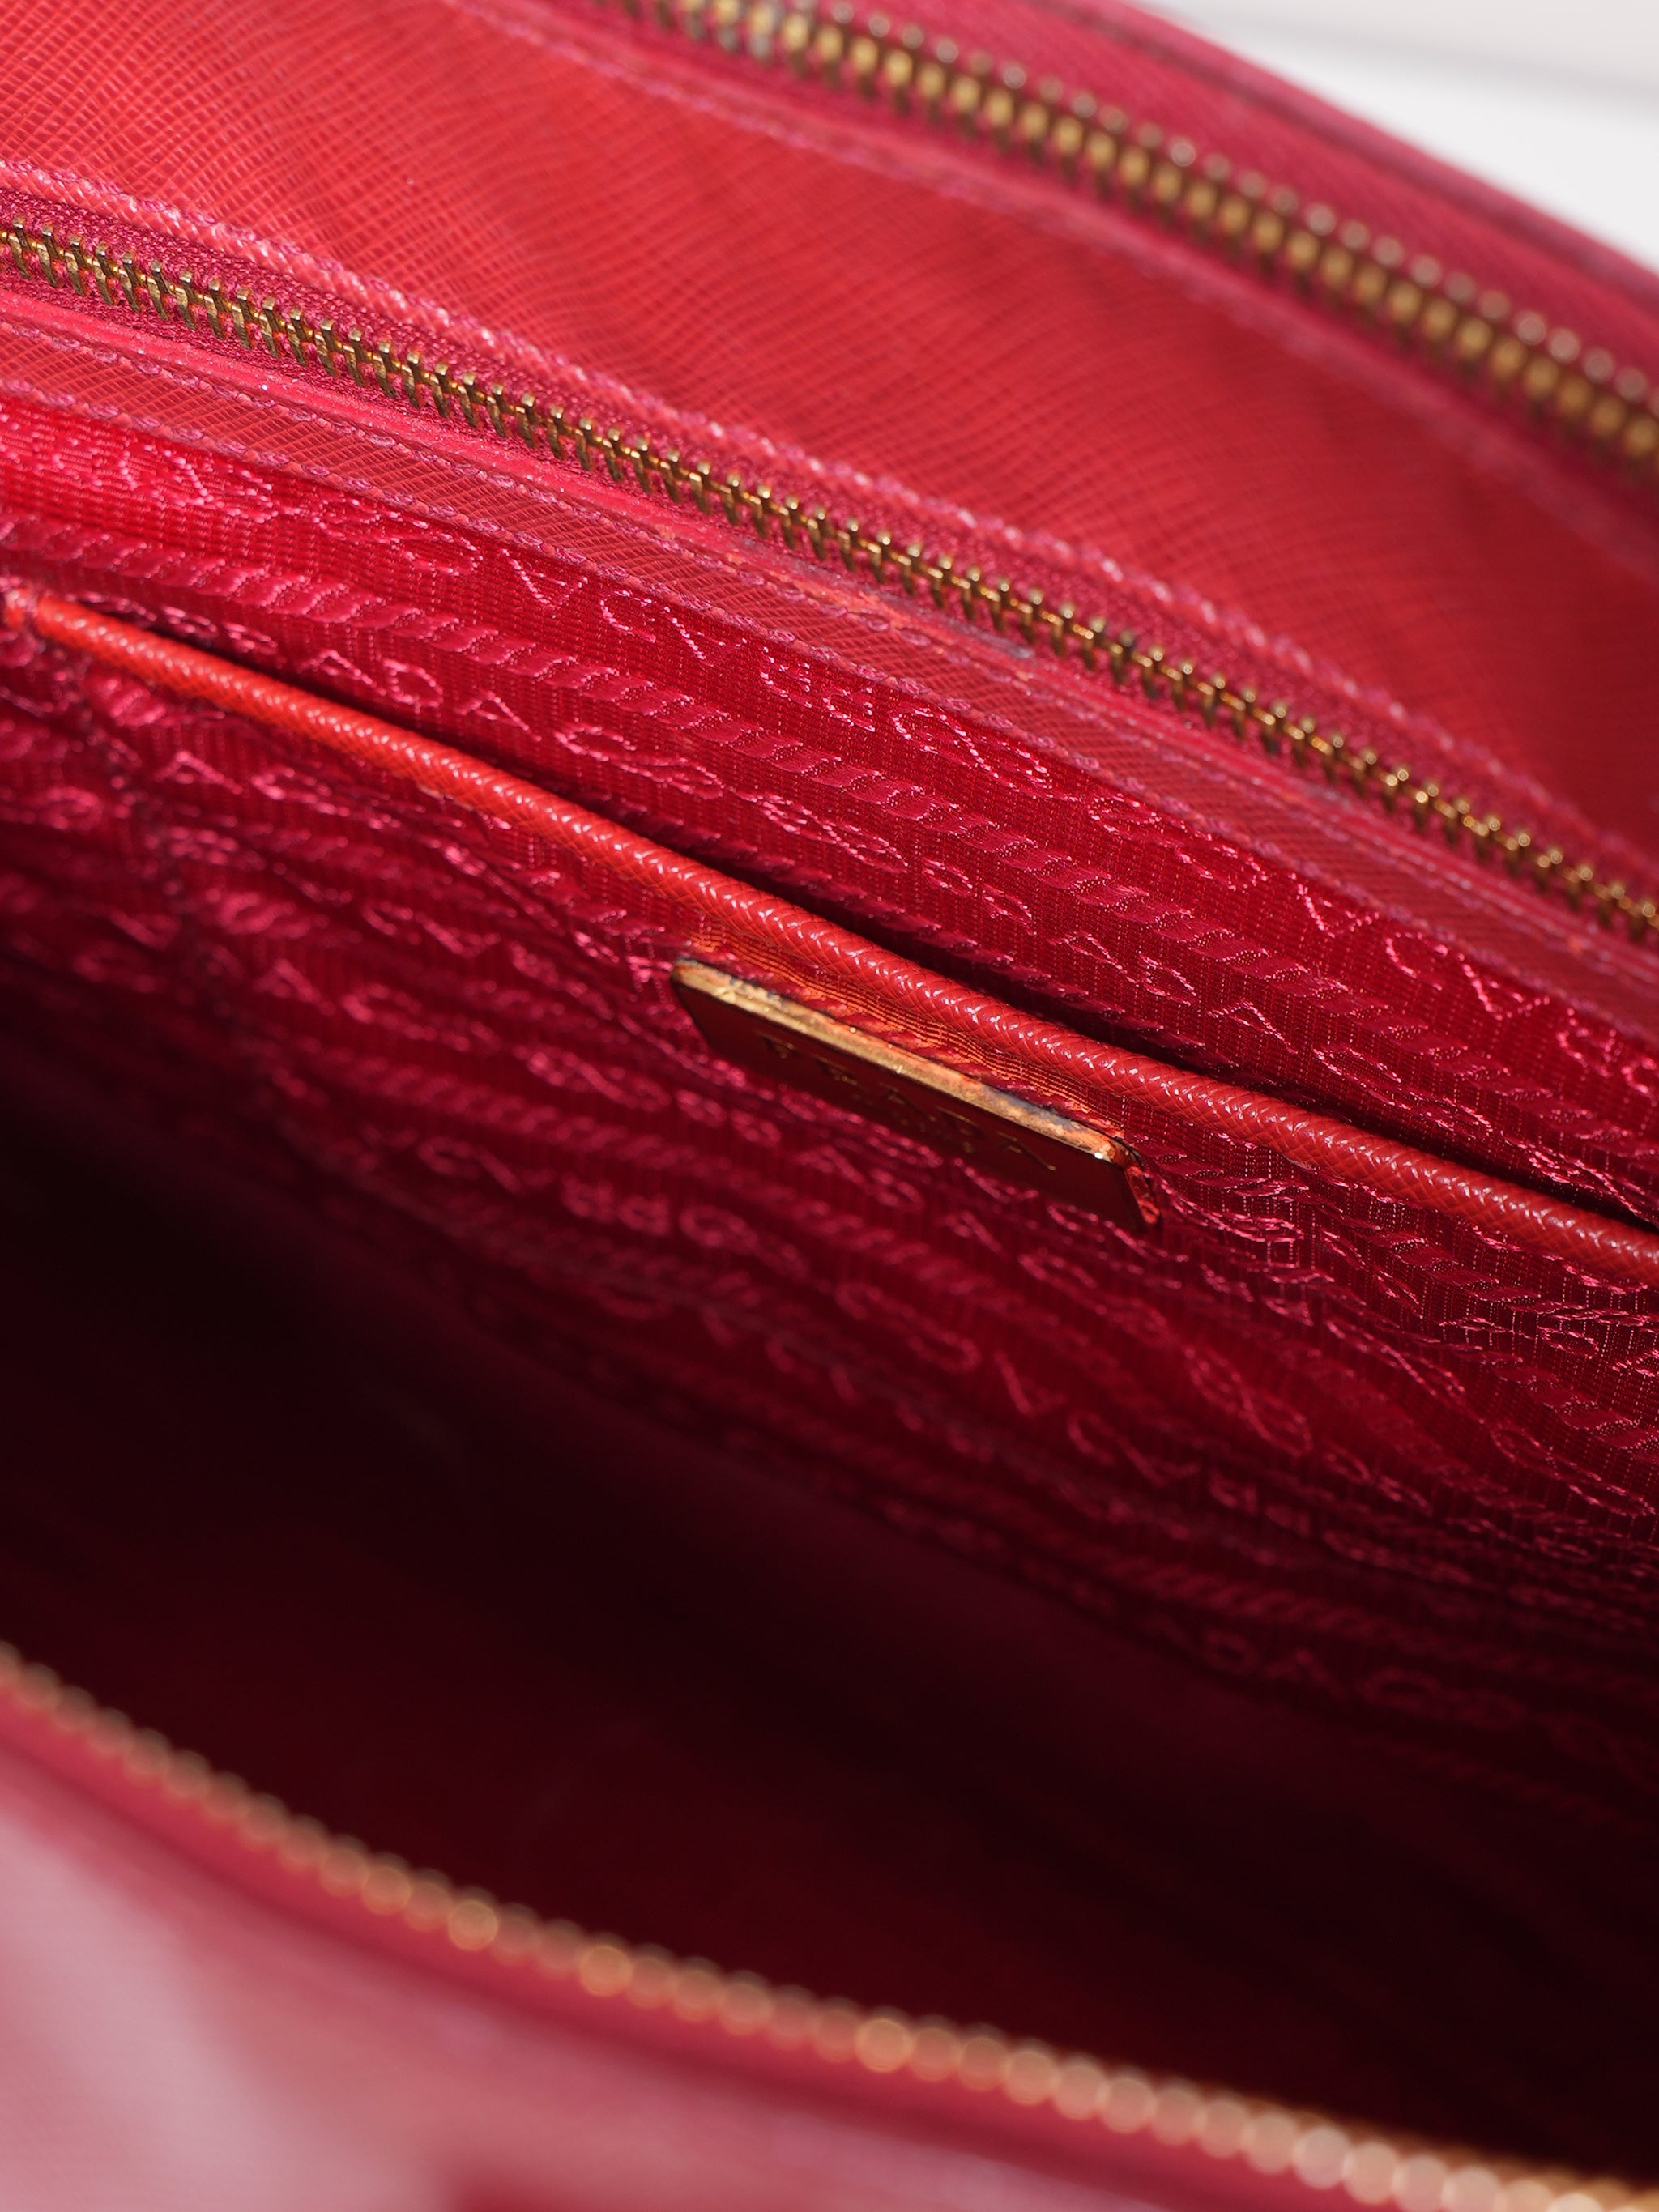 PRADA Canapa Bag Purse Canvas Red inside zipper pocket gold hardware Used |  eBay